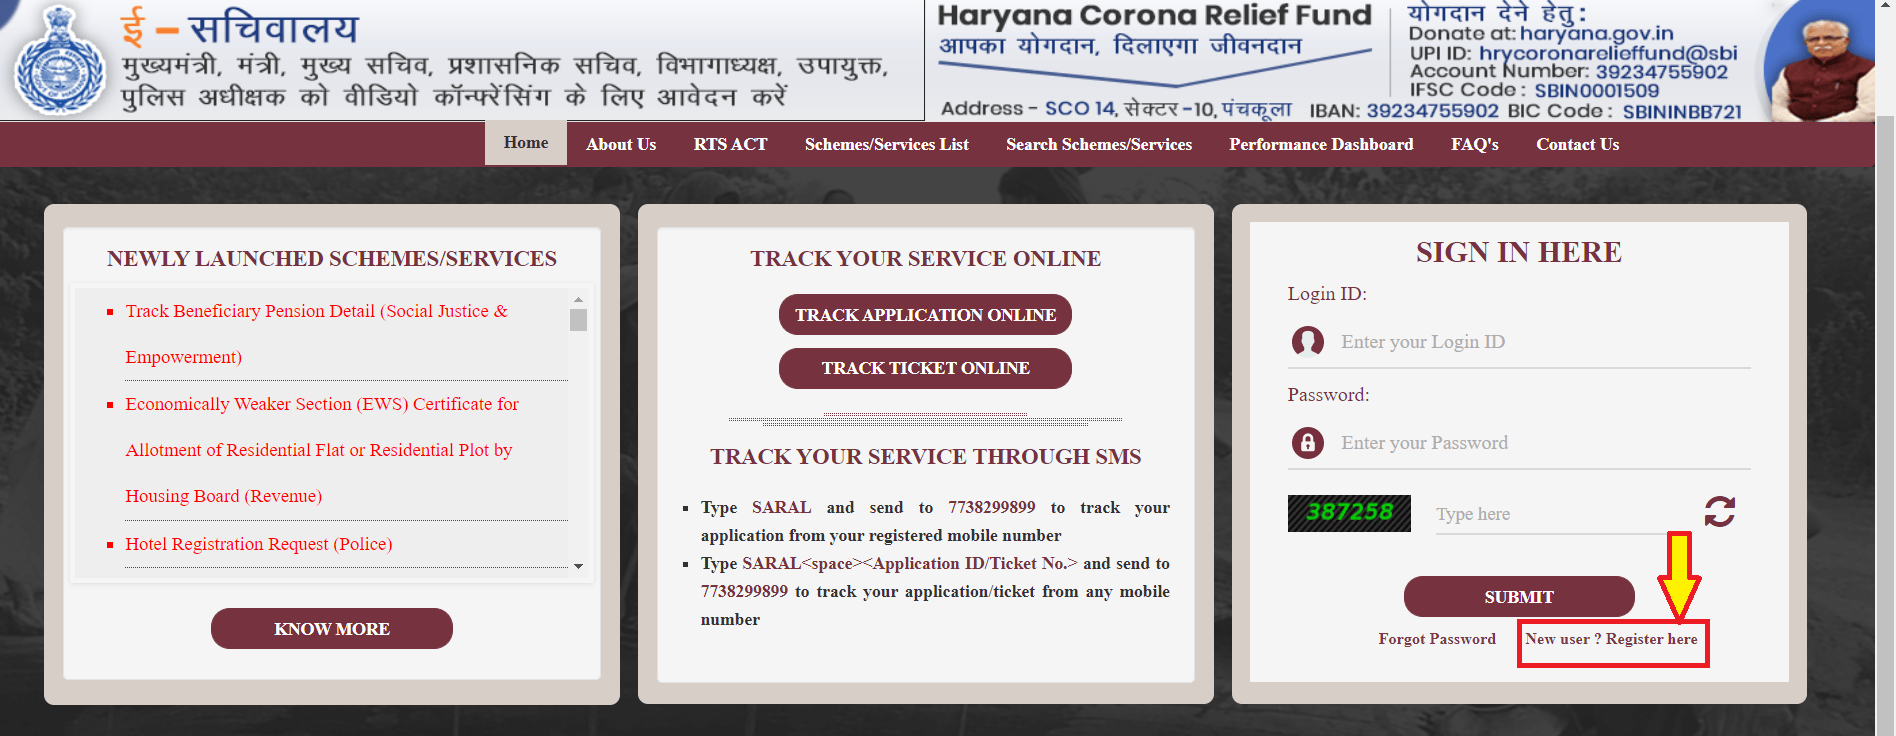 Hariyana-Ration-Card new user register